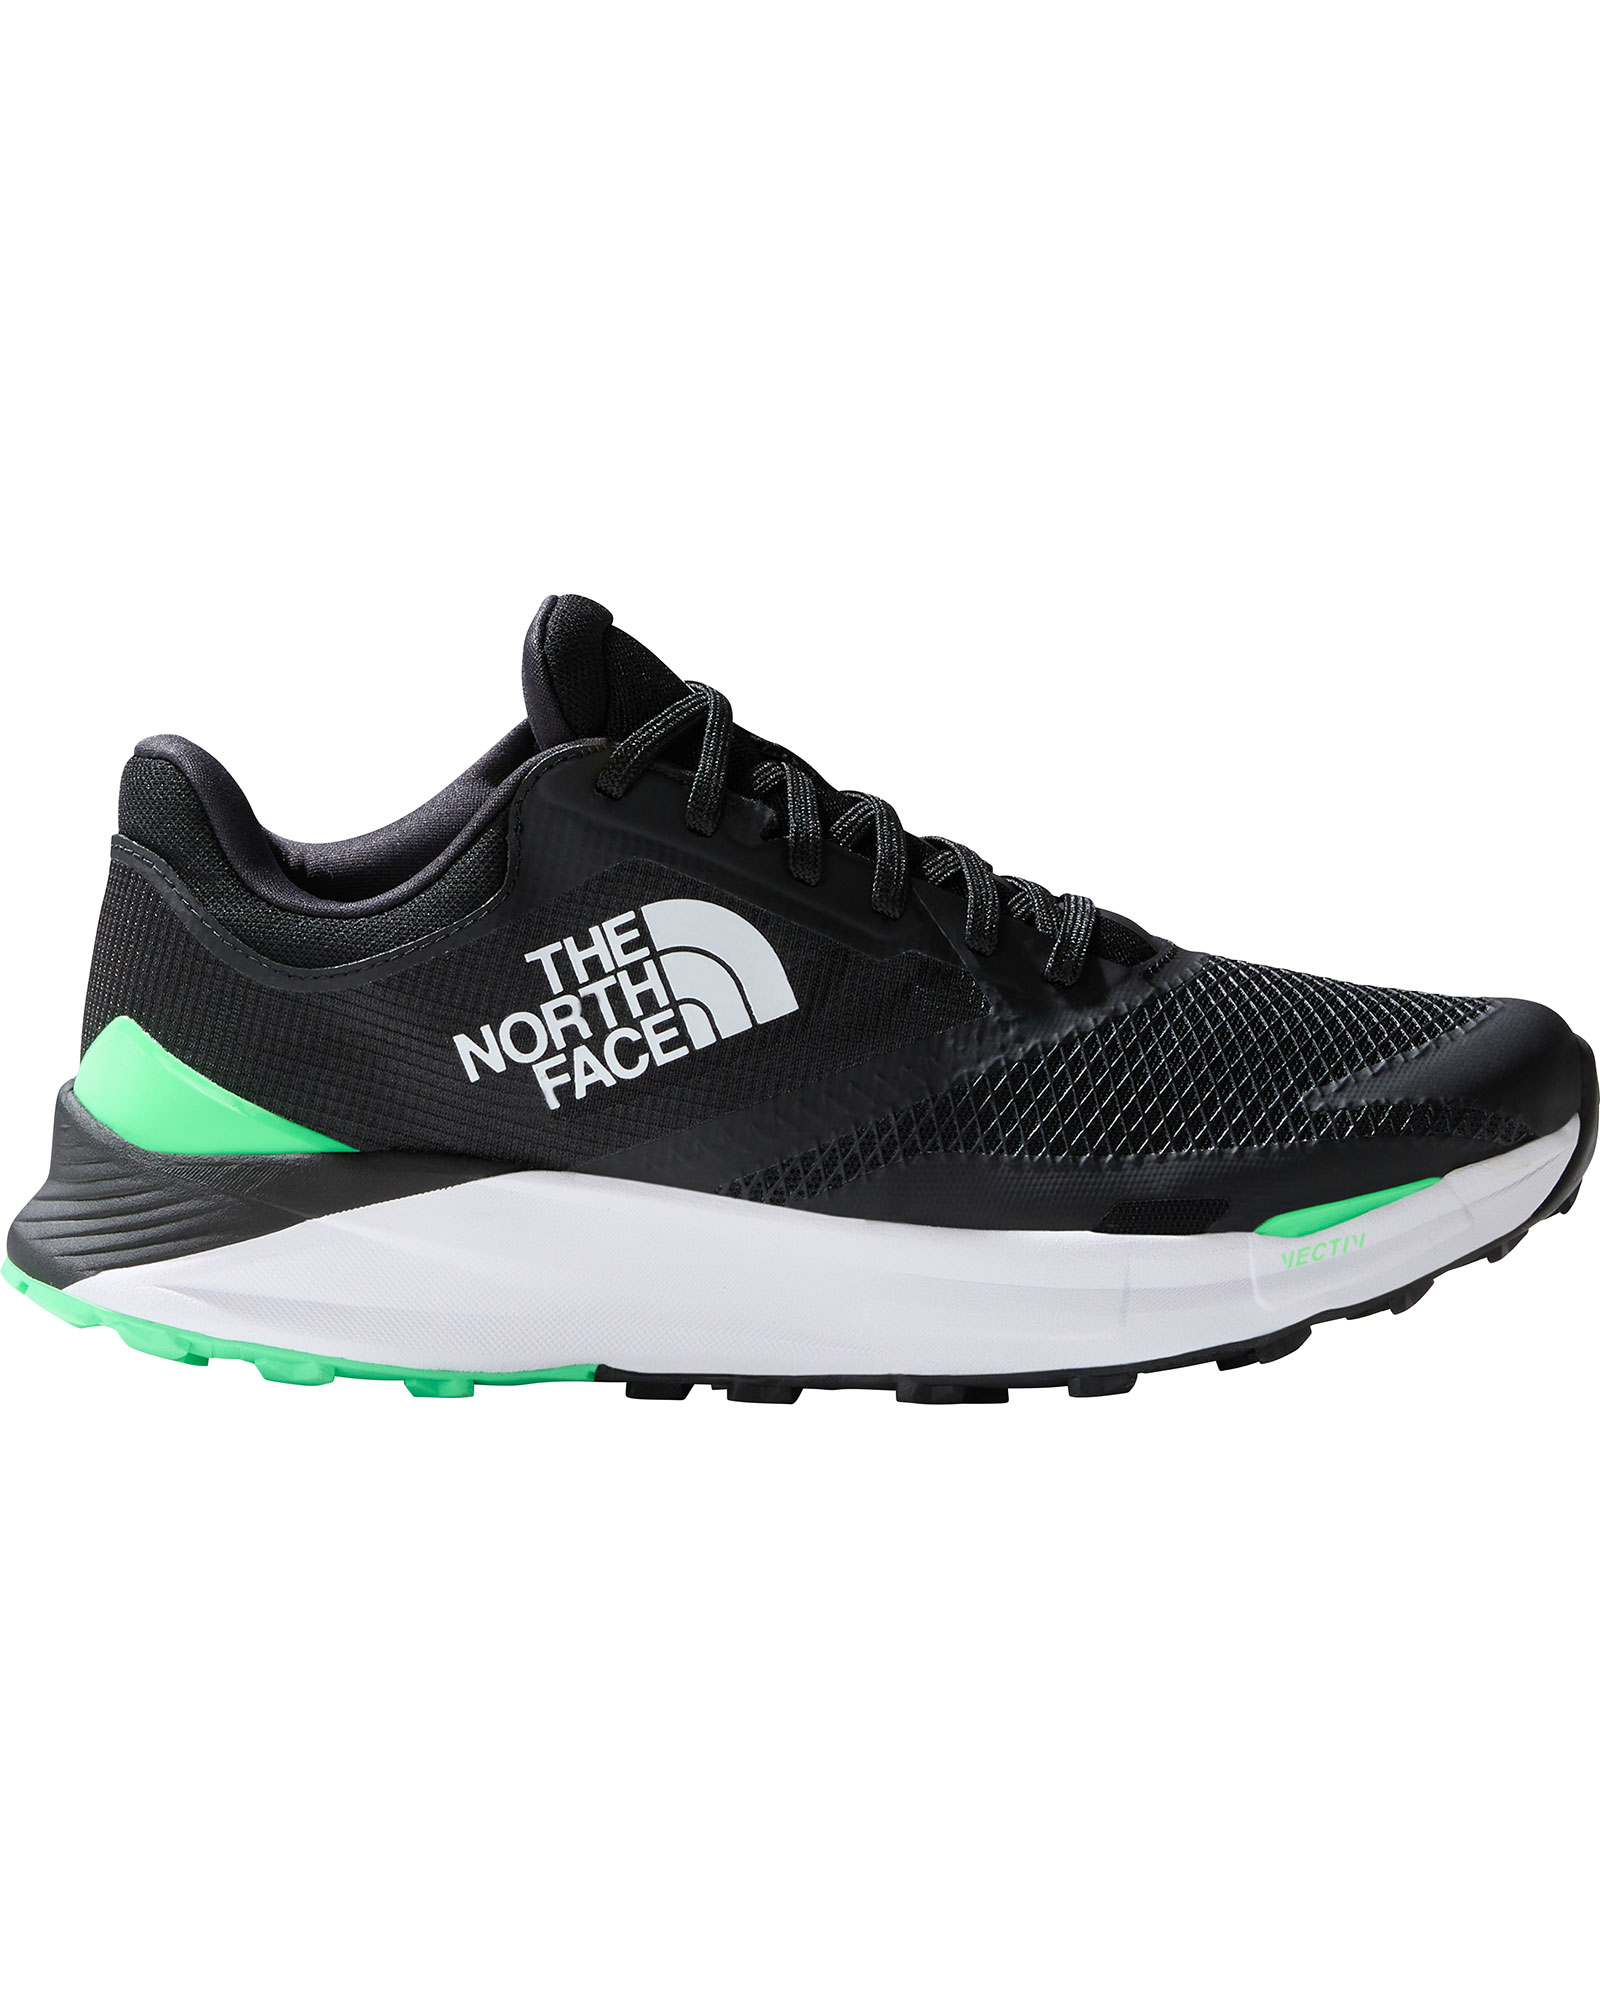 The North Face Vectiv Enduris 3 Men’s Trail Shoes - TNF Black/Chlorophyll Green UK 7.5